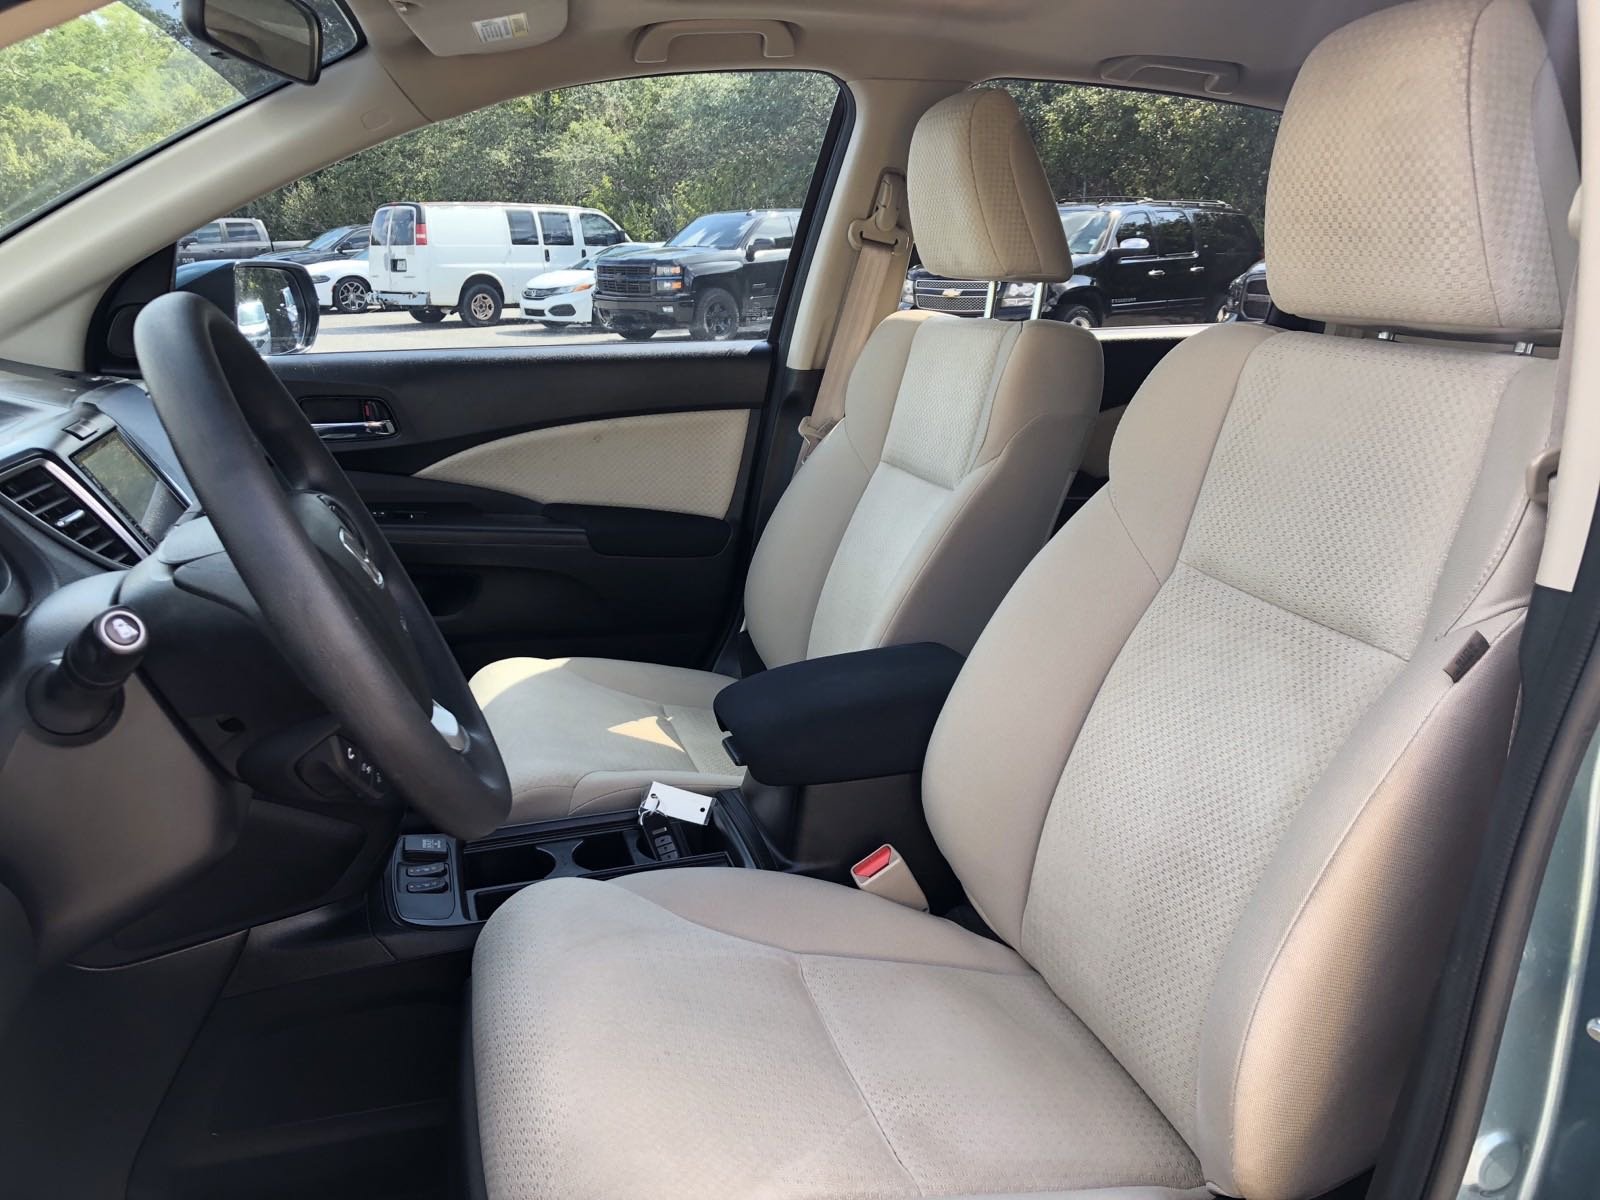 Seat Armrest Real Leather Cover for Honda CR-V 07-09 Gray